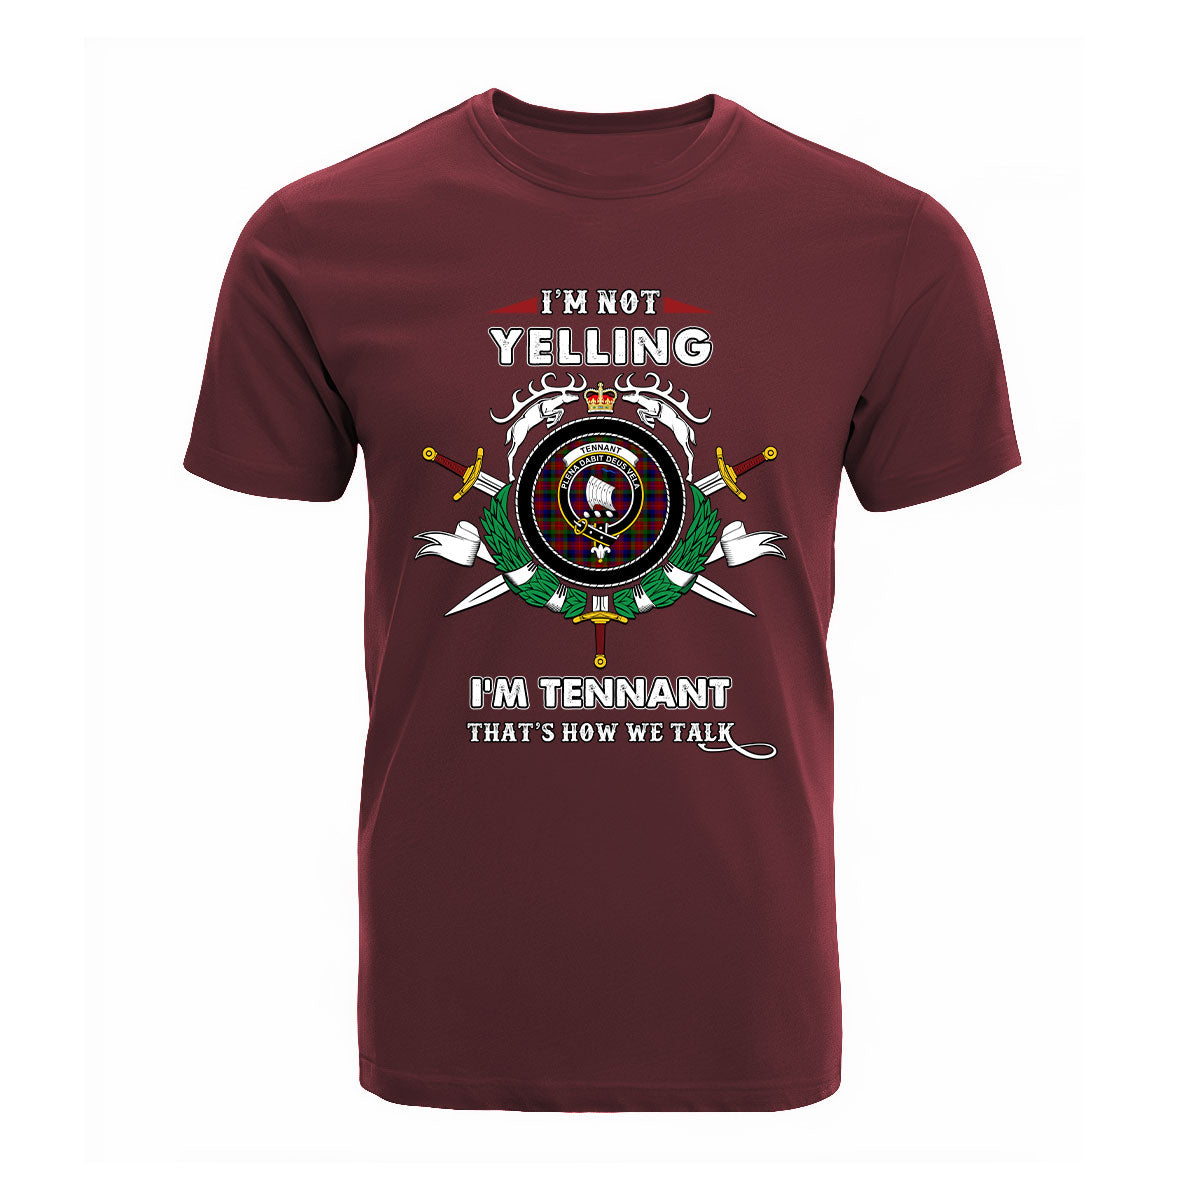 Tennant Tartan Crest T-shirt - I'm not yelling style